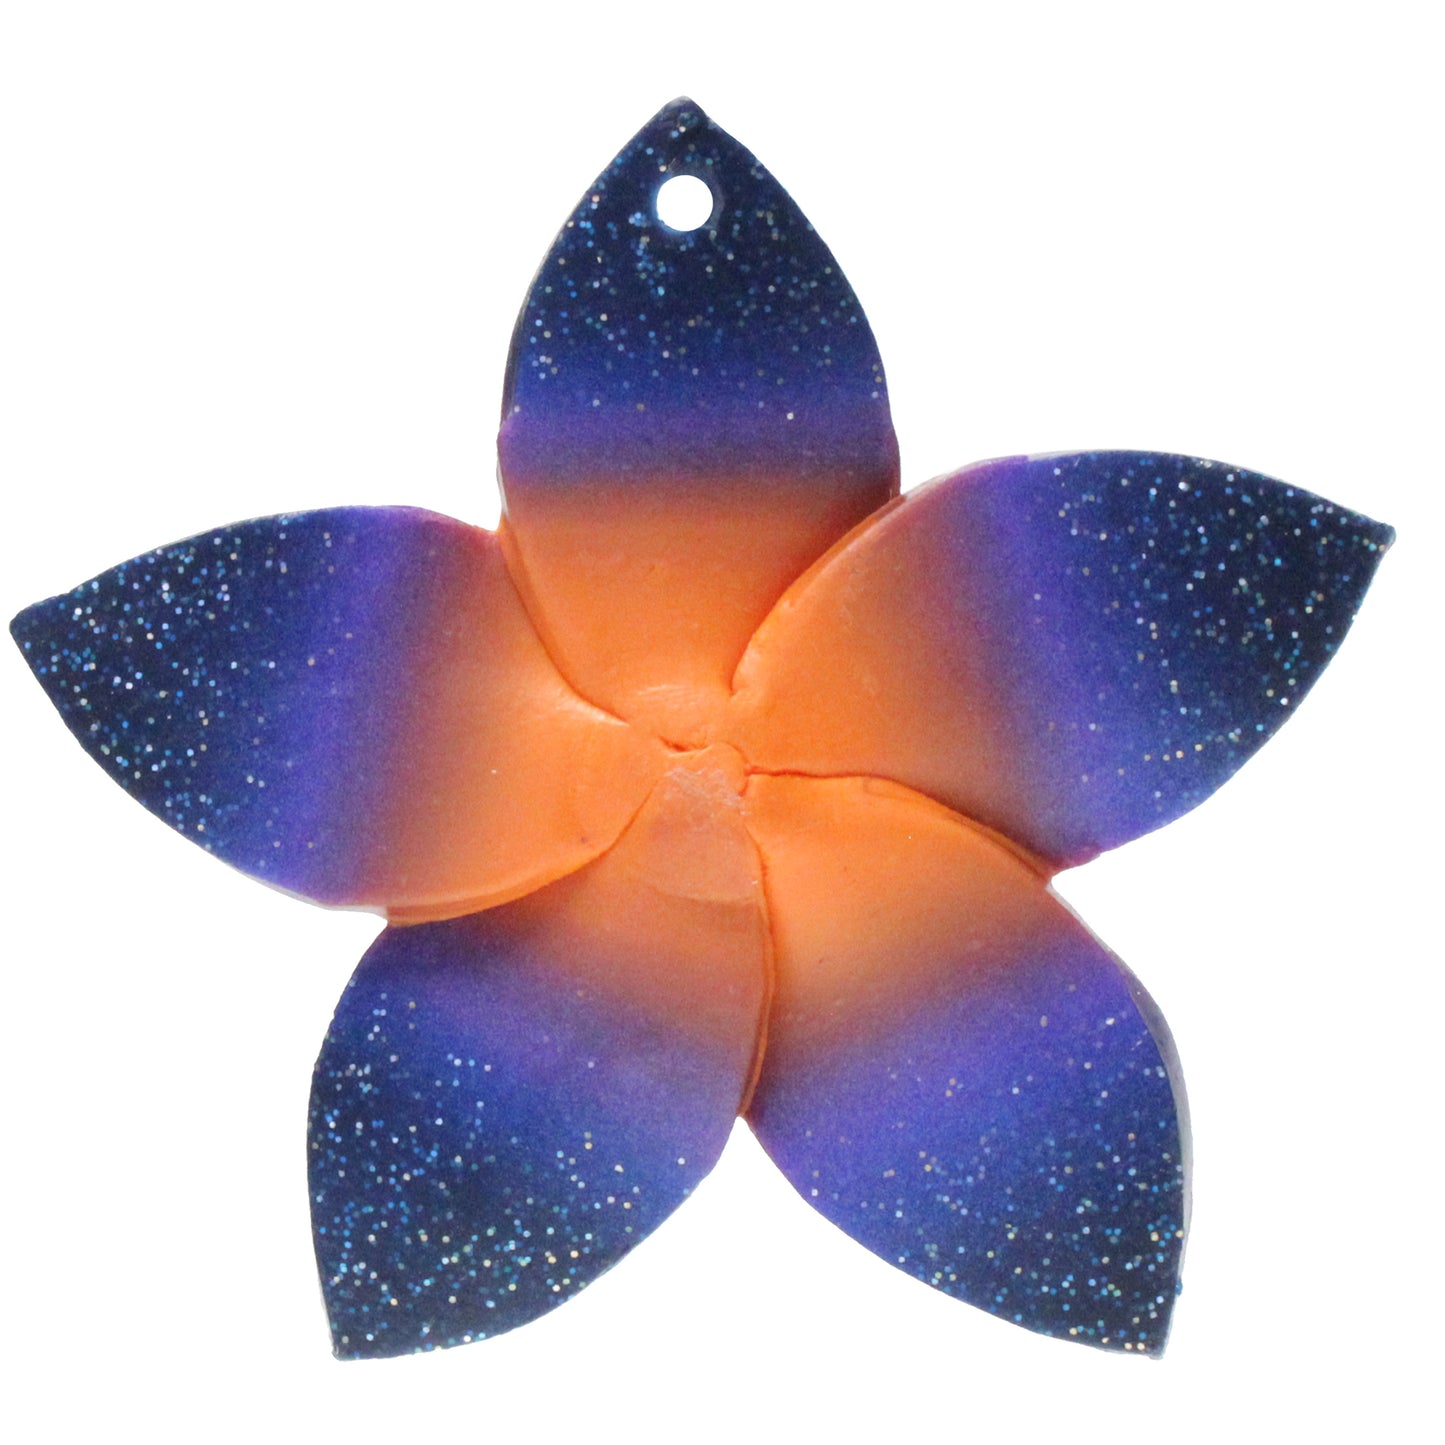 Large Plumeria Flower Charm / orange with galaxy blue trim / handmade polymer clay / 50mm diameter